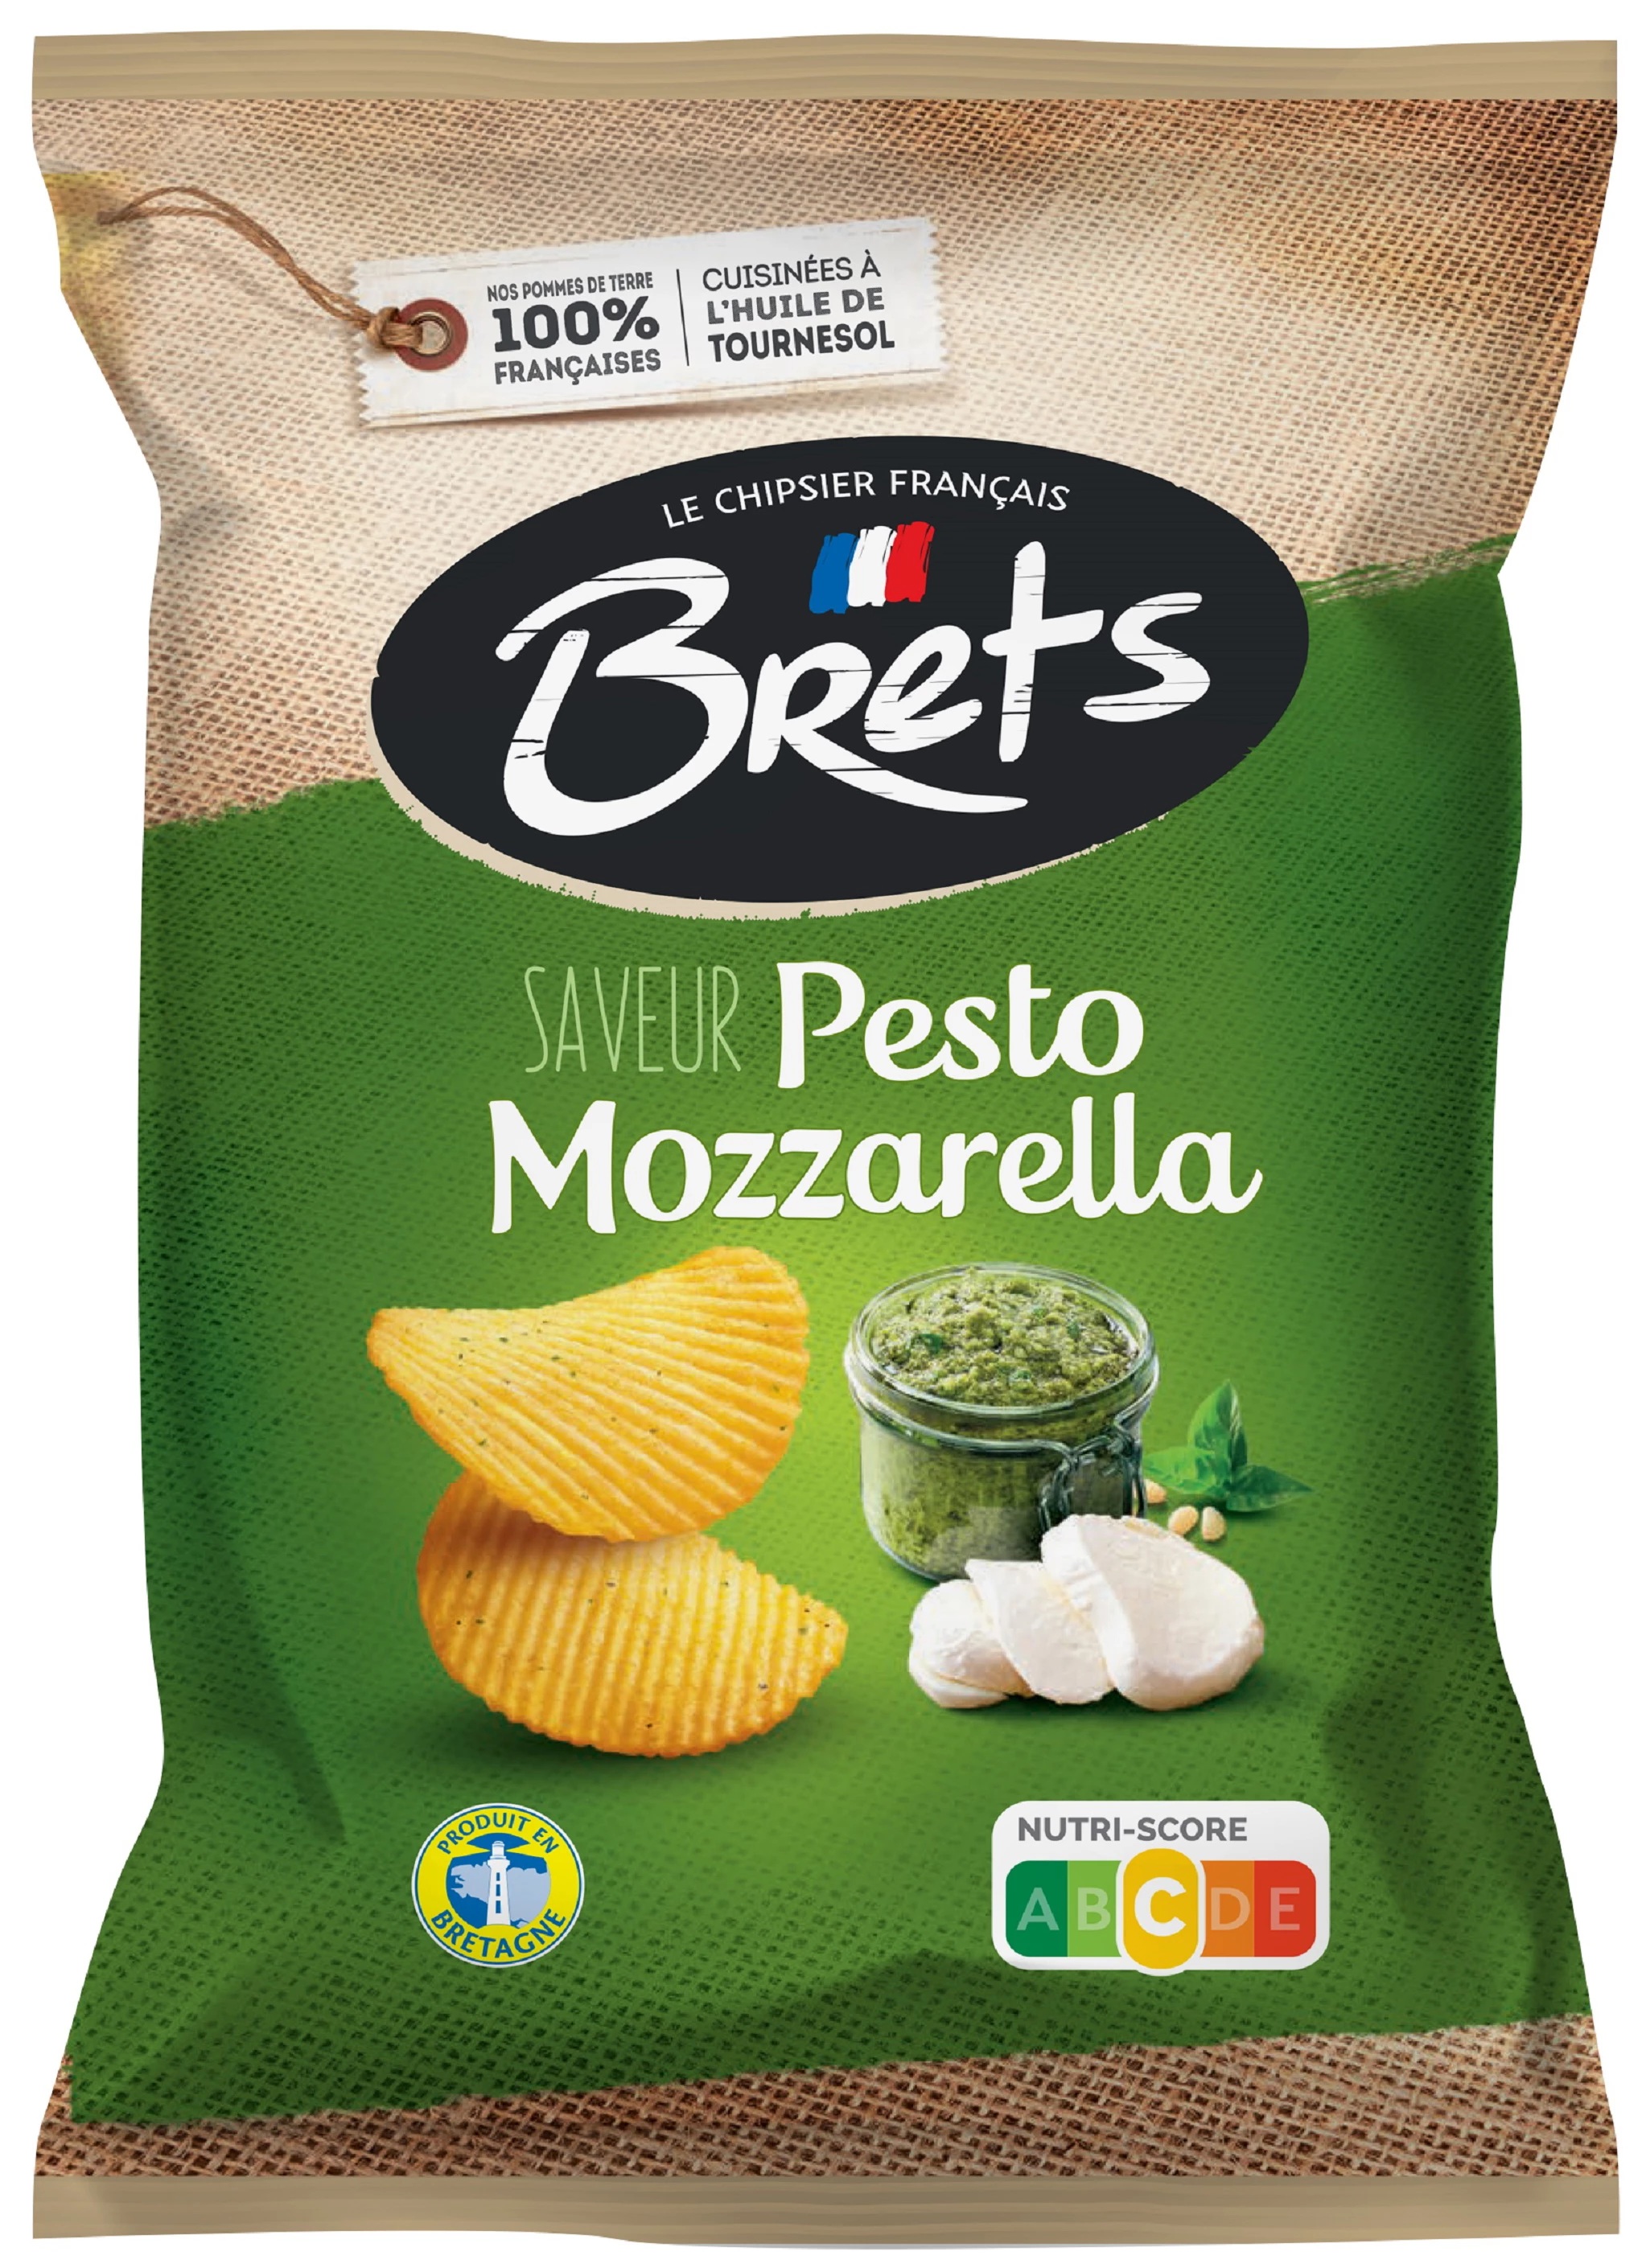 Chips Bret's Pesto Mozza, 125g - BRET'S